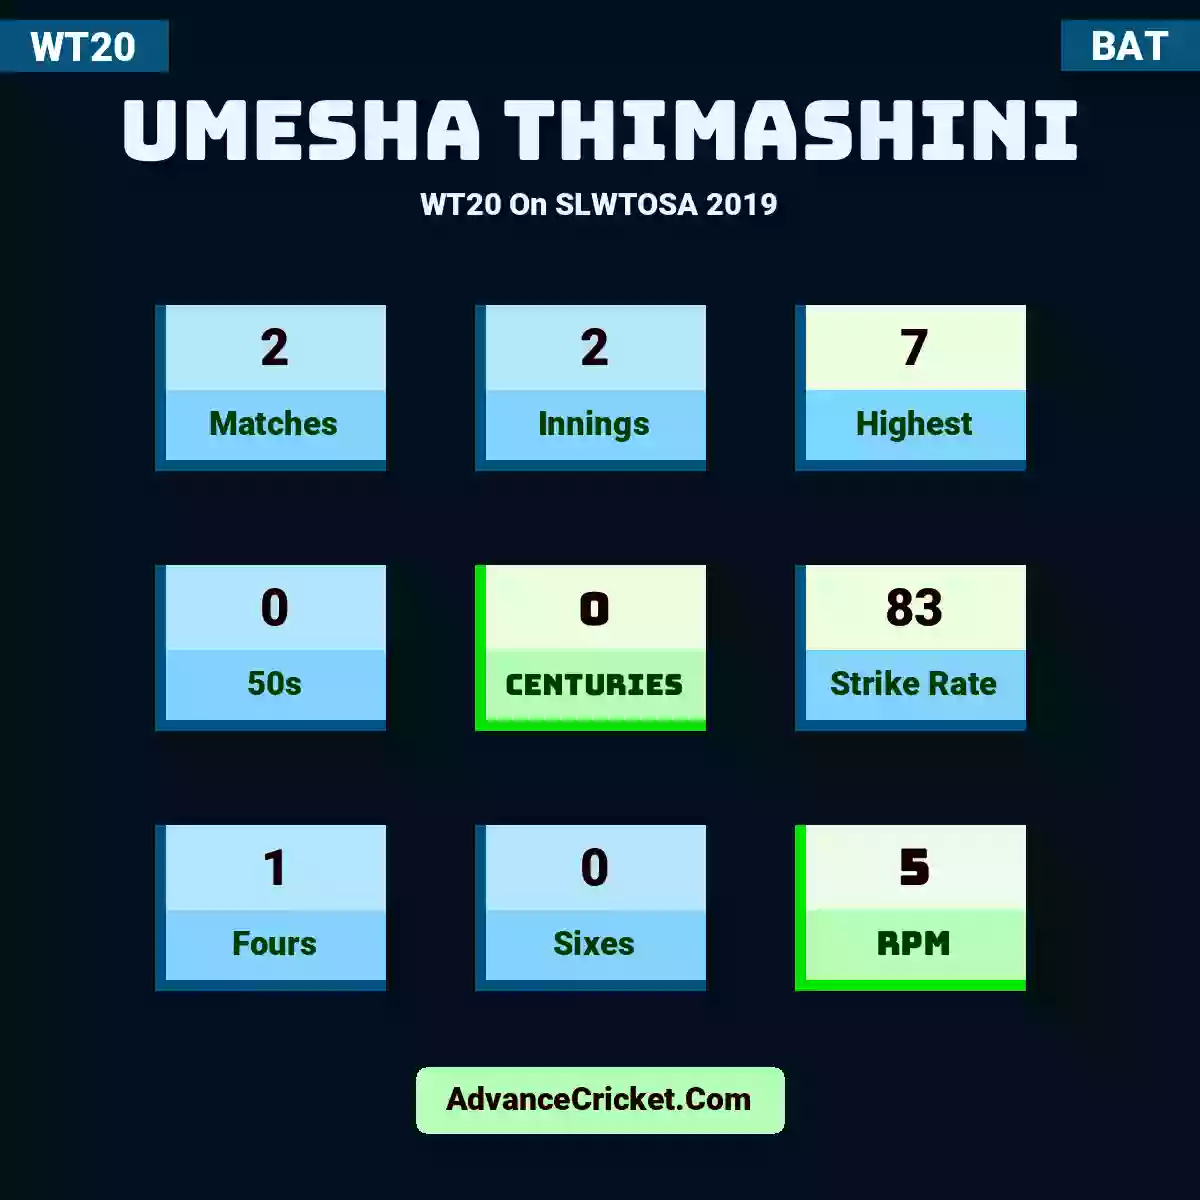 Umesha Thimashini WT20  On SLWTOSA 2019, Umesha Thimashini played 2 matches, scored 7 runs as highest, 0 half-centuries, and 0 centuries, with a strike rate of 83. U.Thimashini hit 1 fours and 0 sixes, with an RPM of 5.